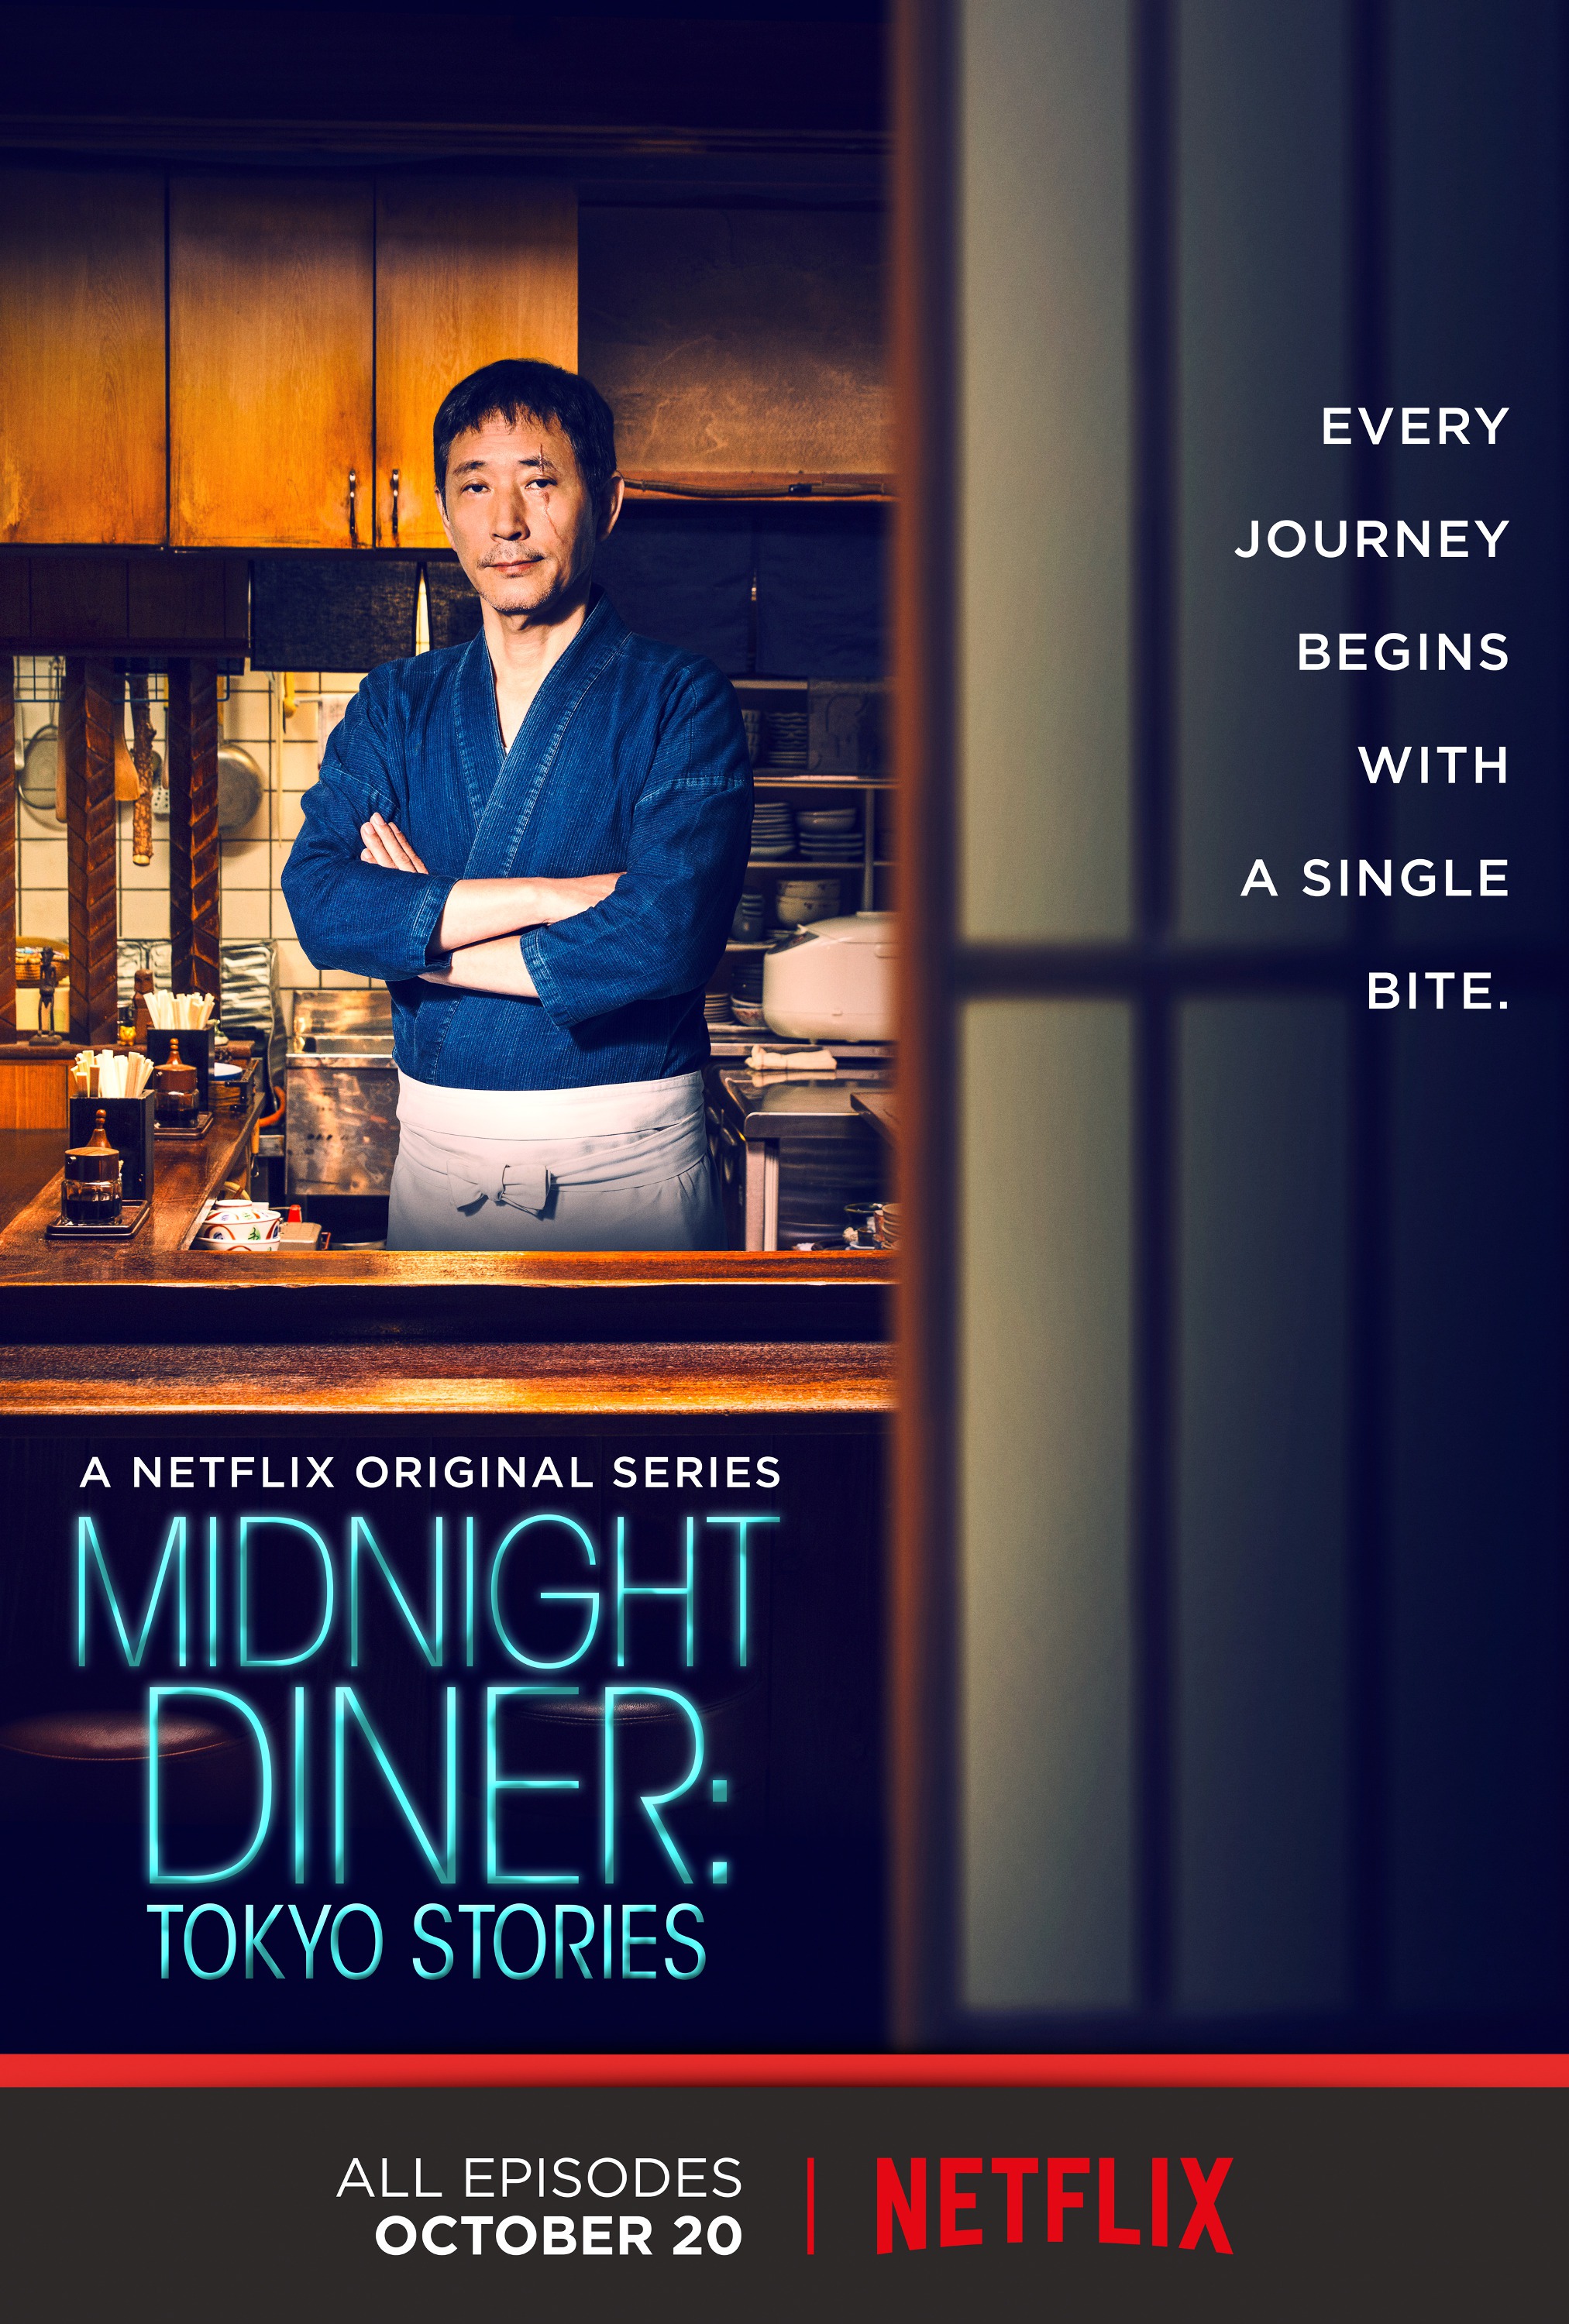 Mega Sized TV Poster Image for Midnight Diner: Tokyo Stories (#2 of 2)